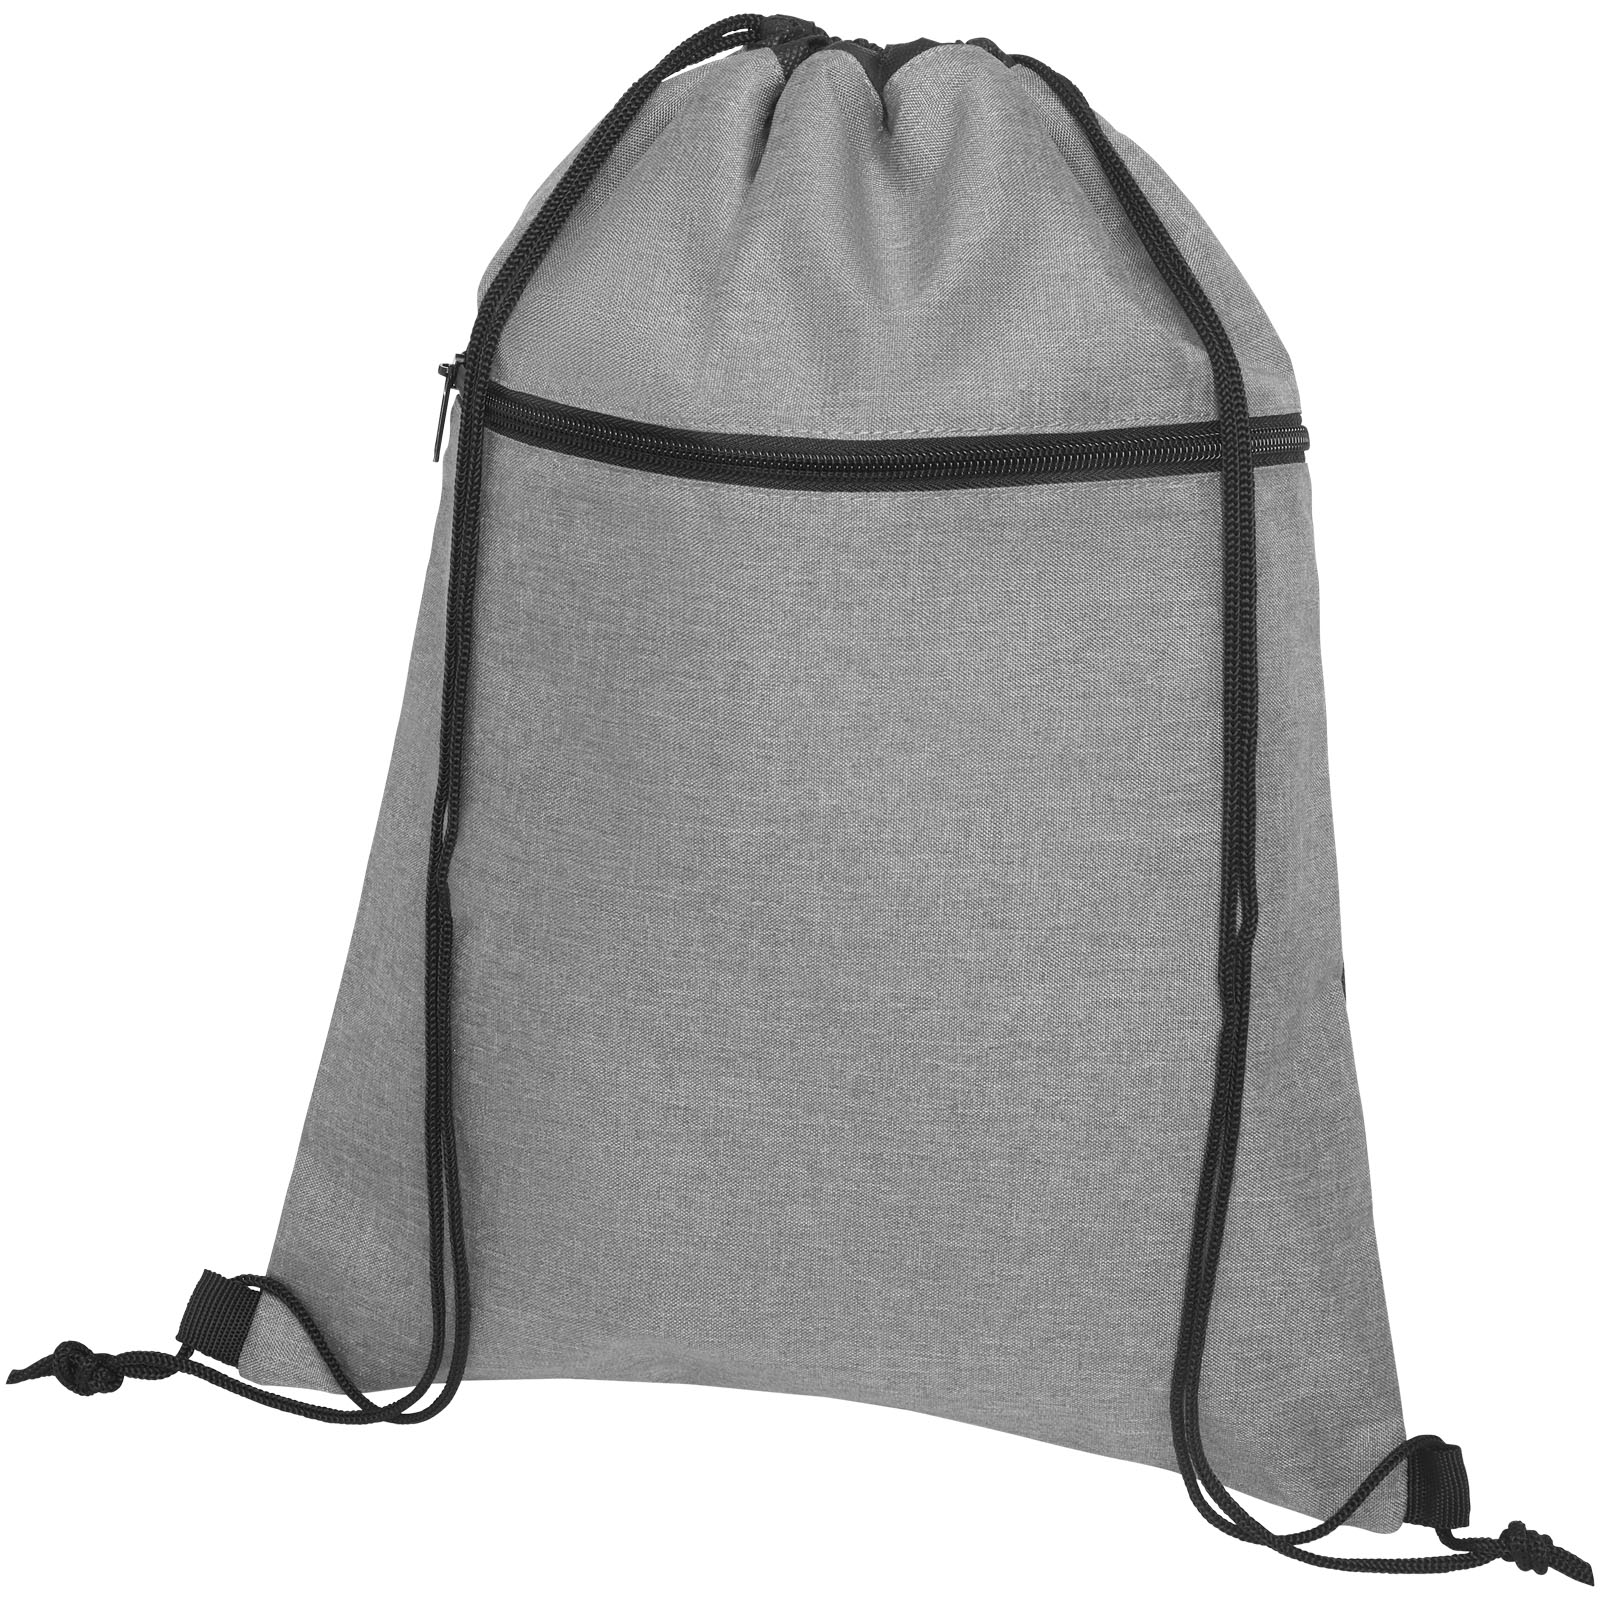 Heathered Black Drawstring Backpack - Shere - Tenterden